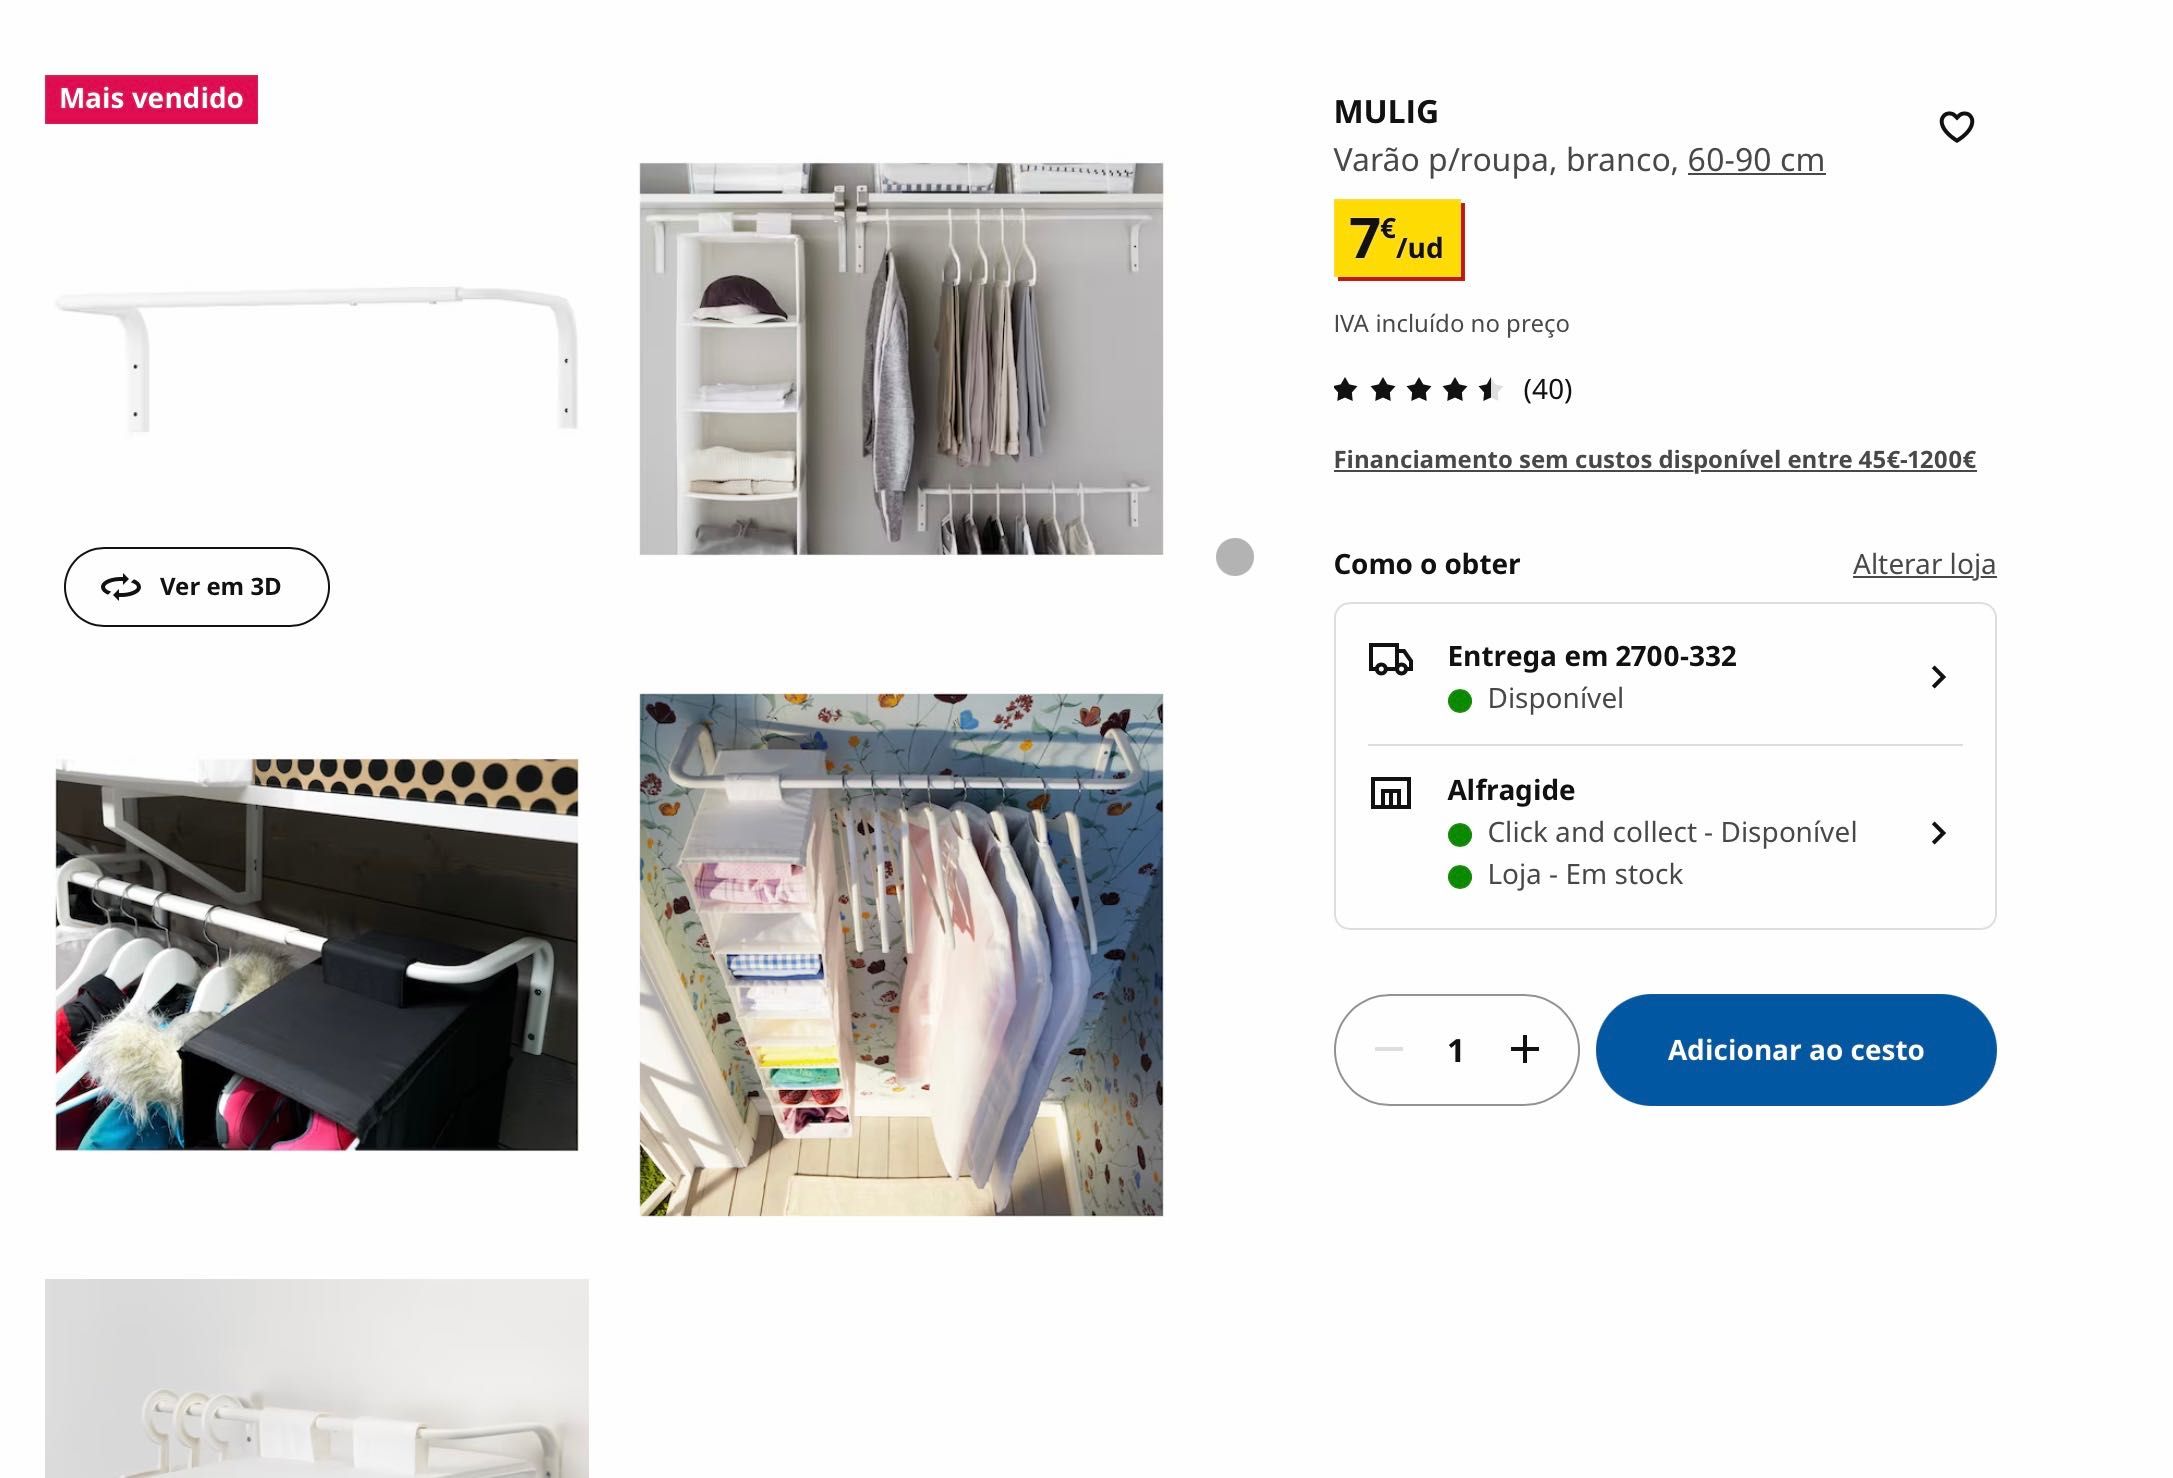 Varão p/roupa branco MULIG Ikea